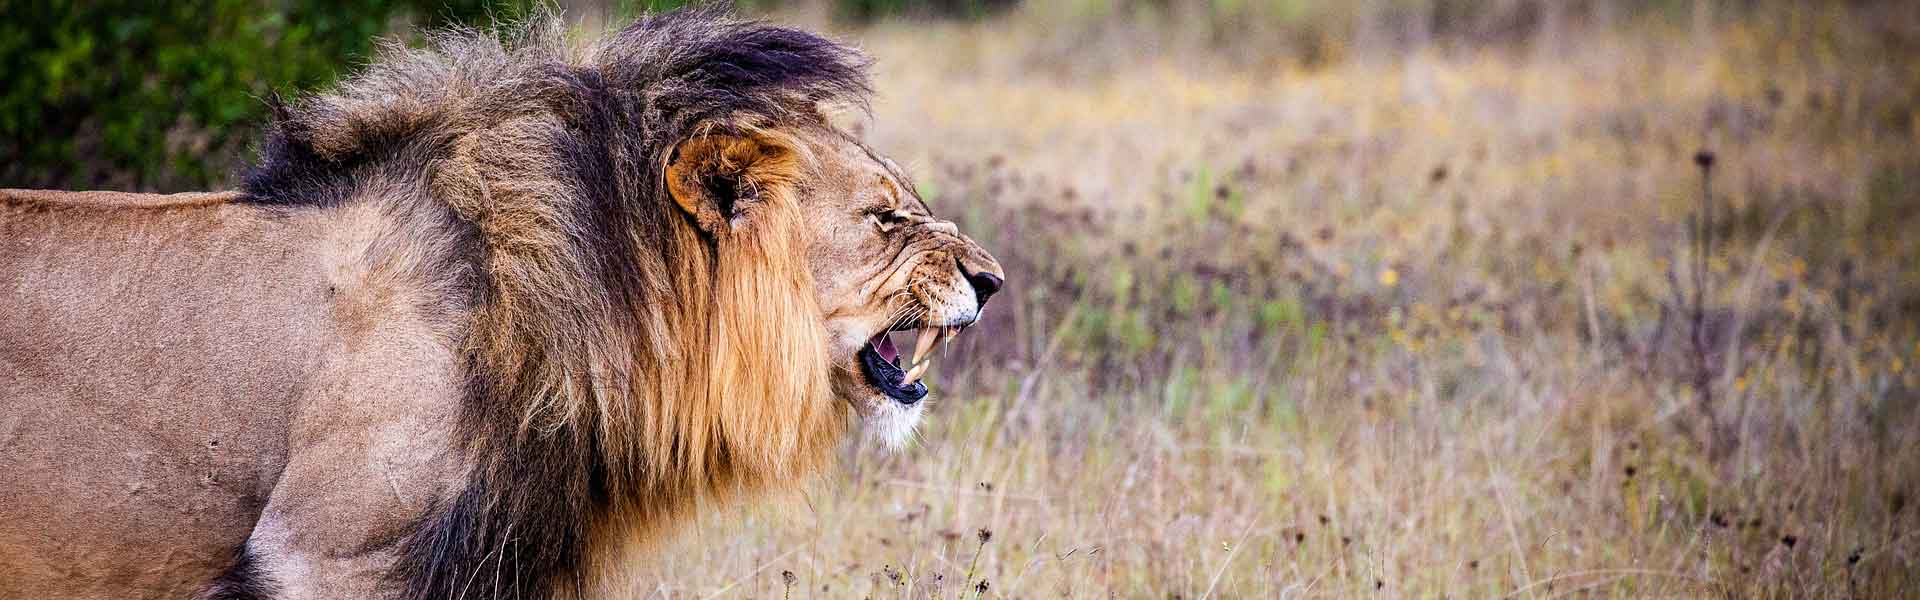 Game Drives Addo Elephant National Park - Lion